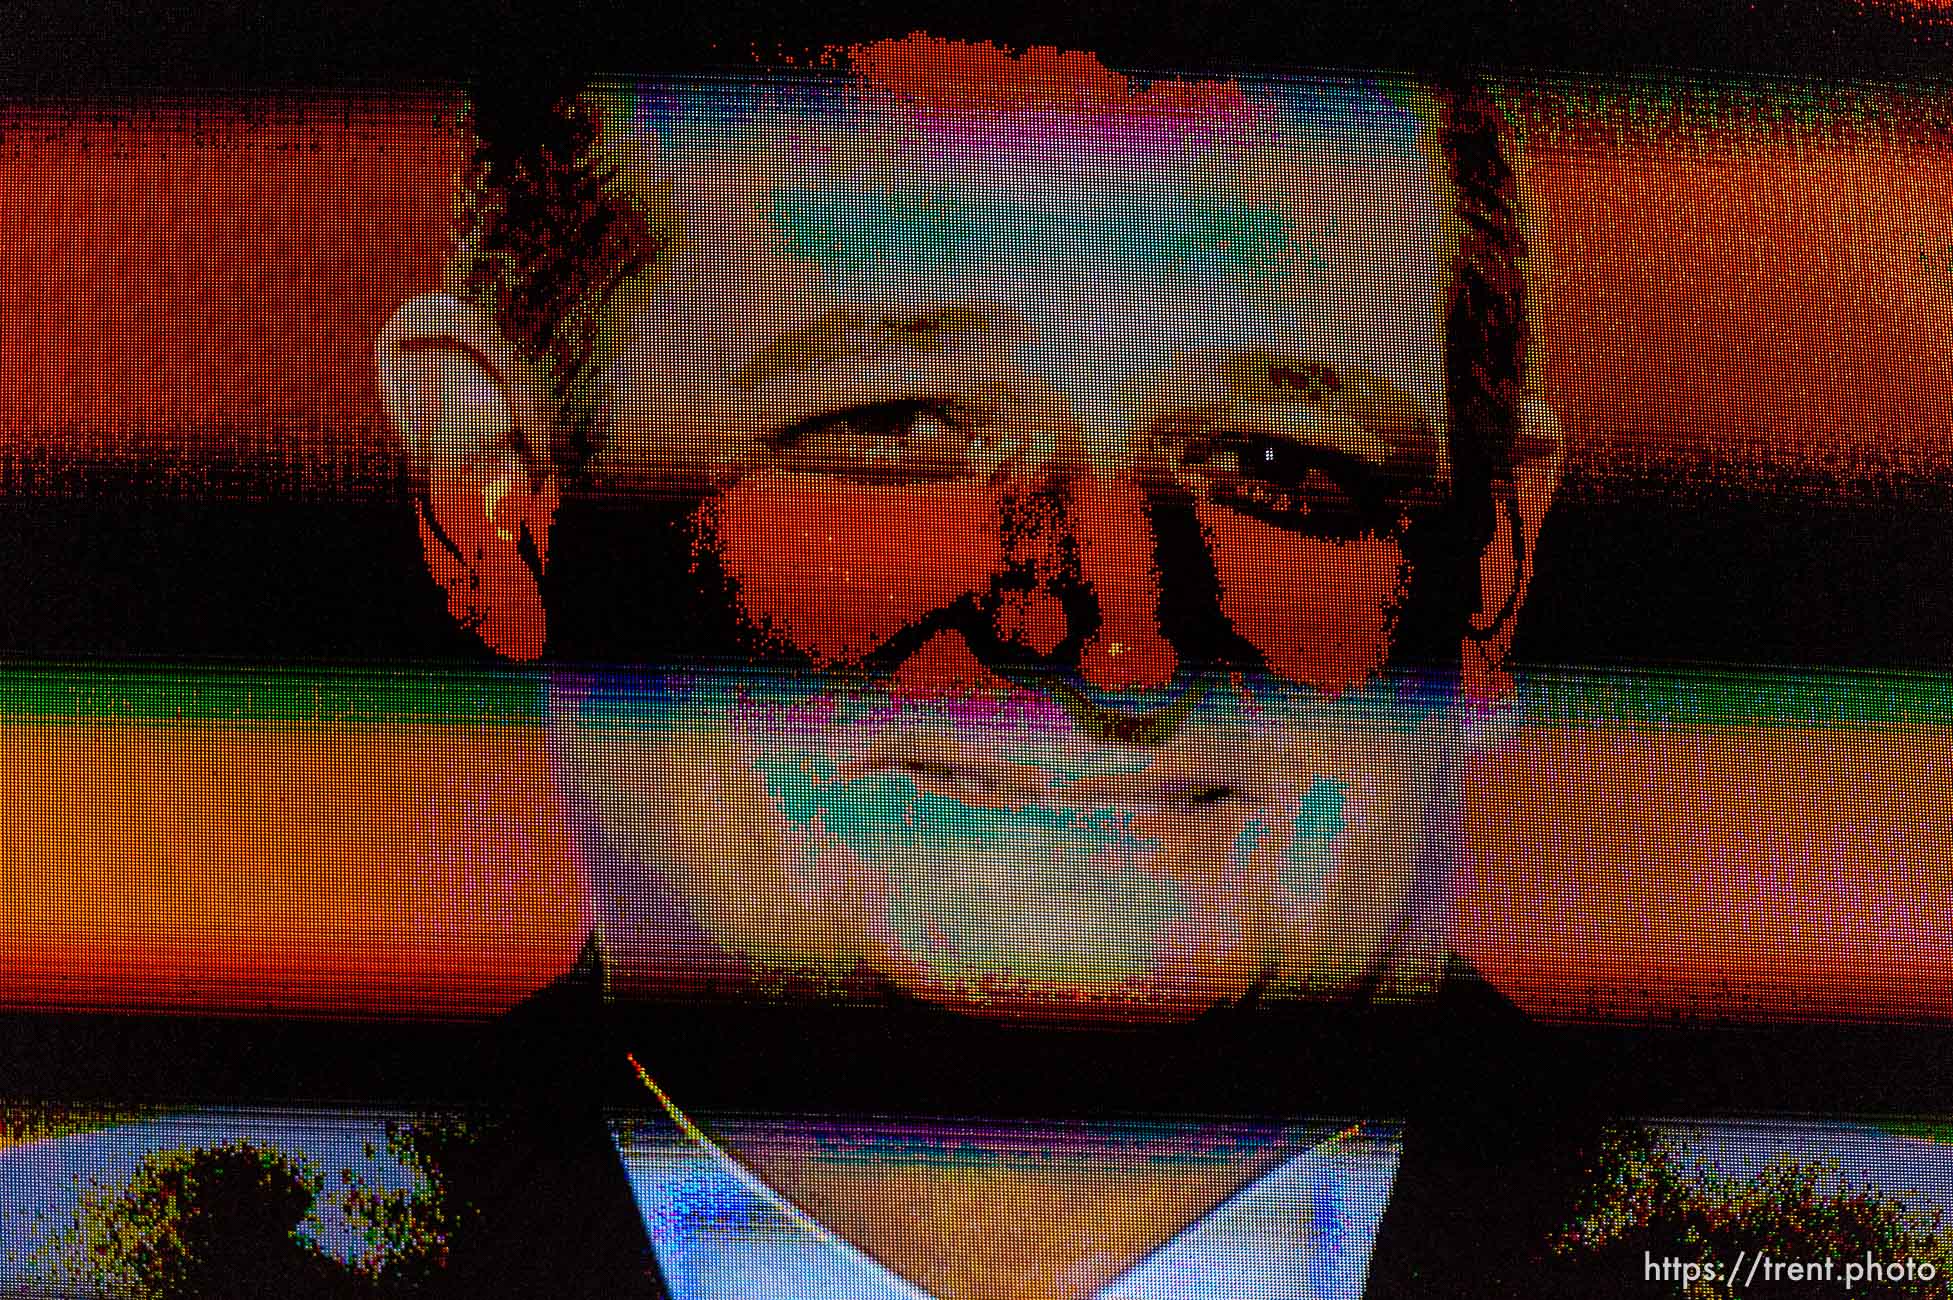 Trump’s Republican National Convention: Ted Cruz